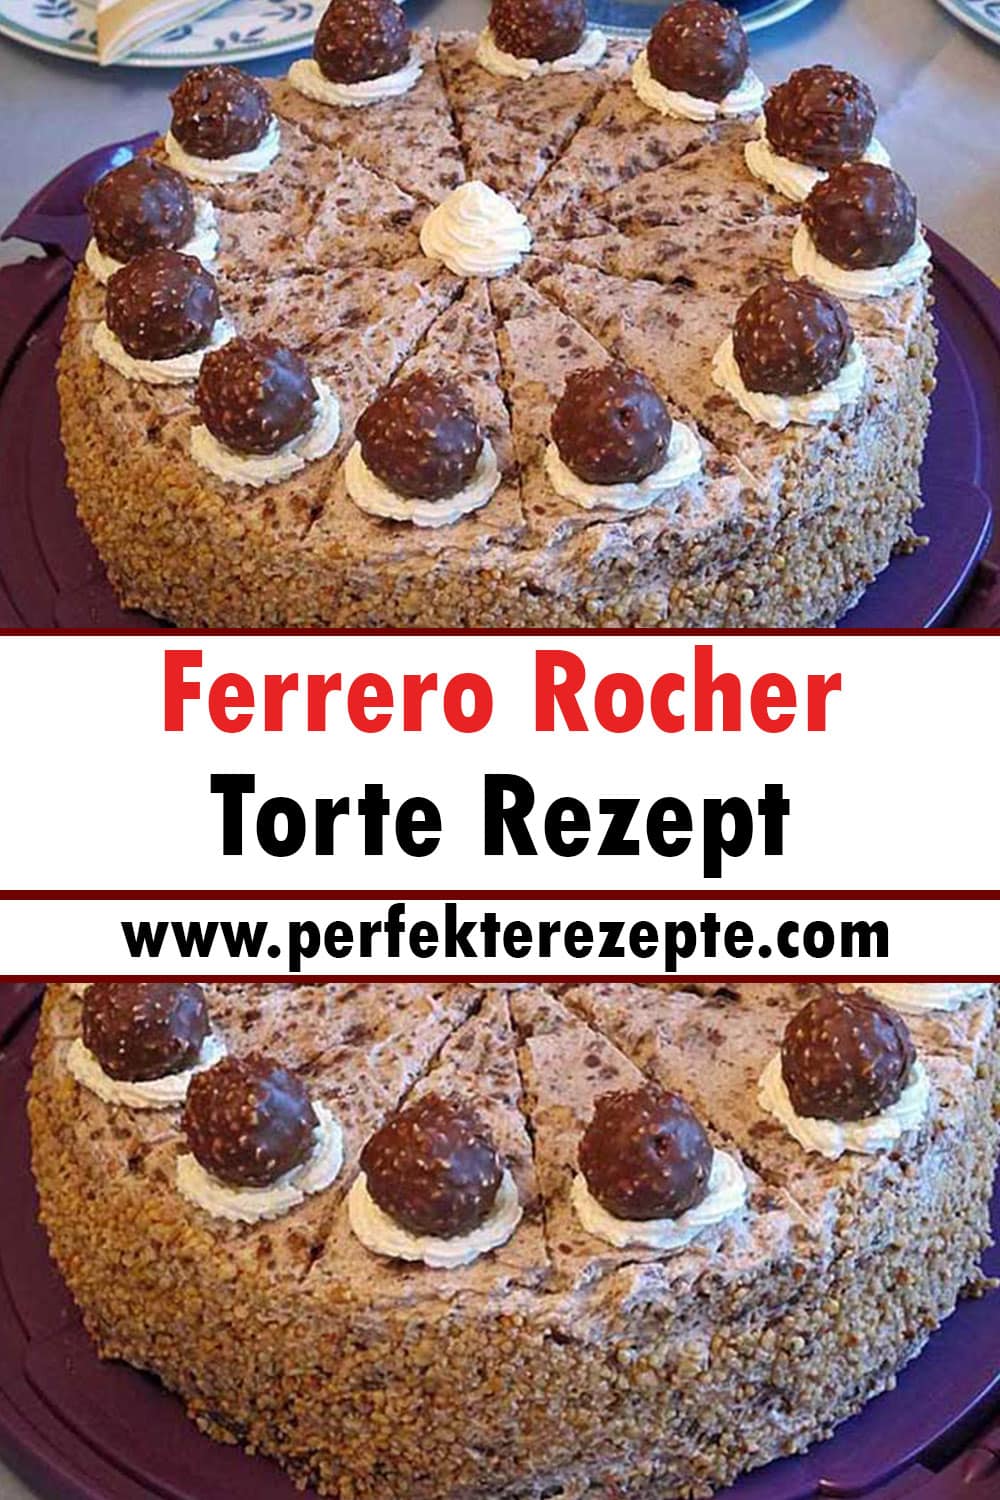 Ferrero Rocher Torte Rezept